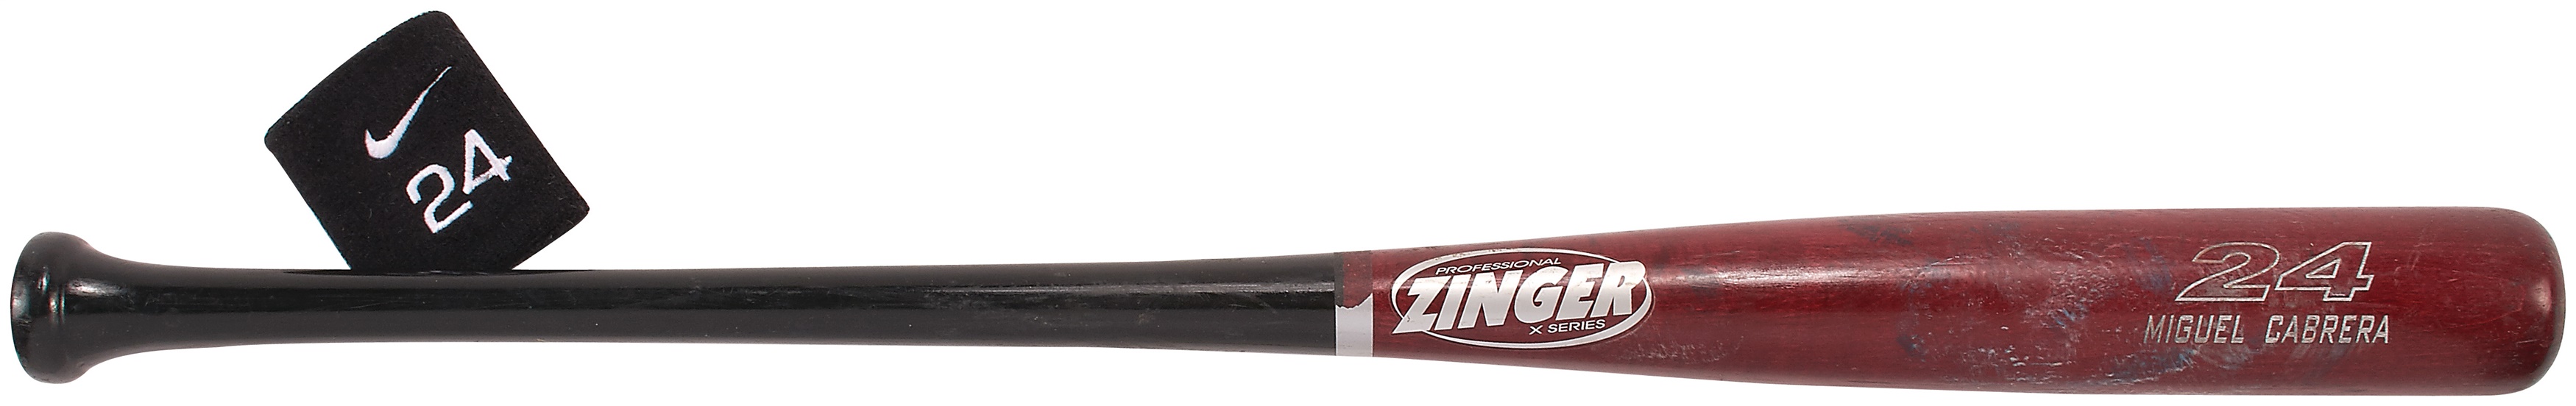 Baseball Equipment - 2005-07 Miguel Cabrera Game Used Zinger Bat & Wristband (PSA 9 LOA)